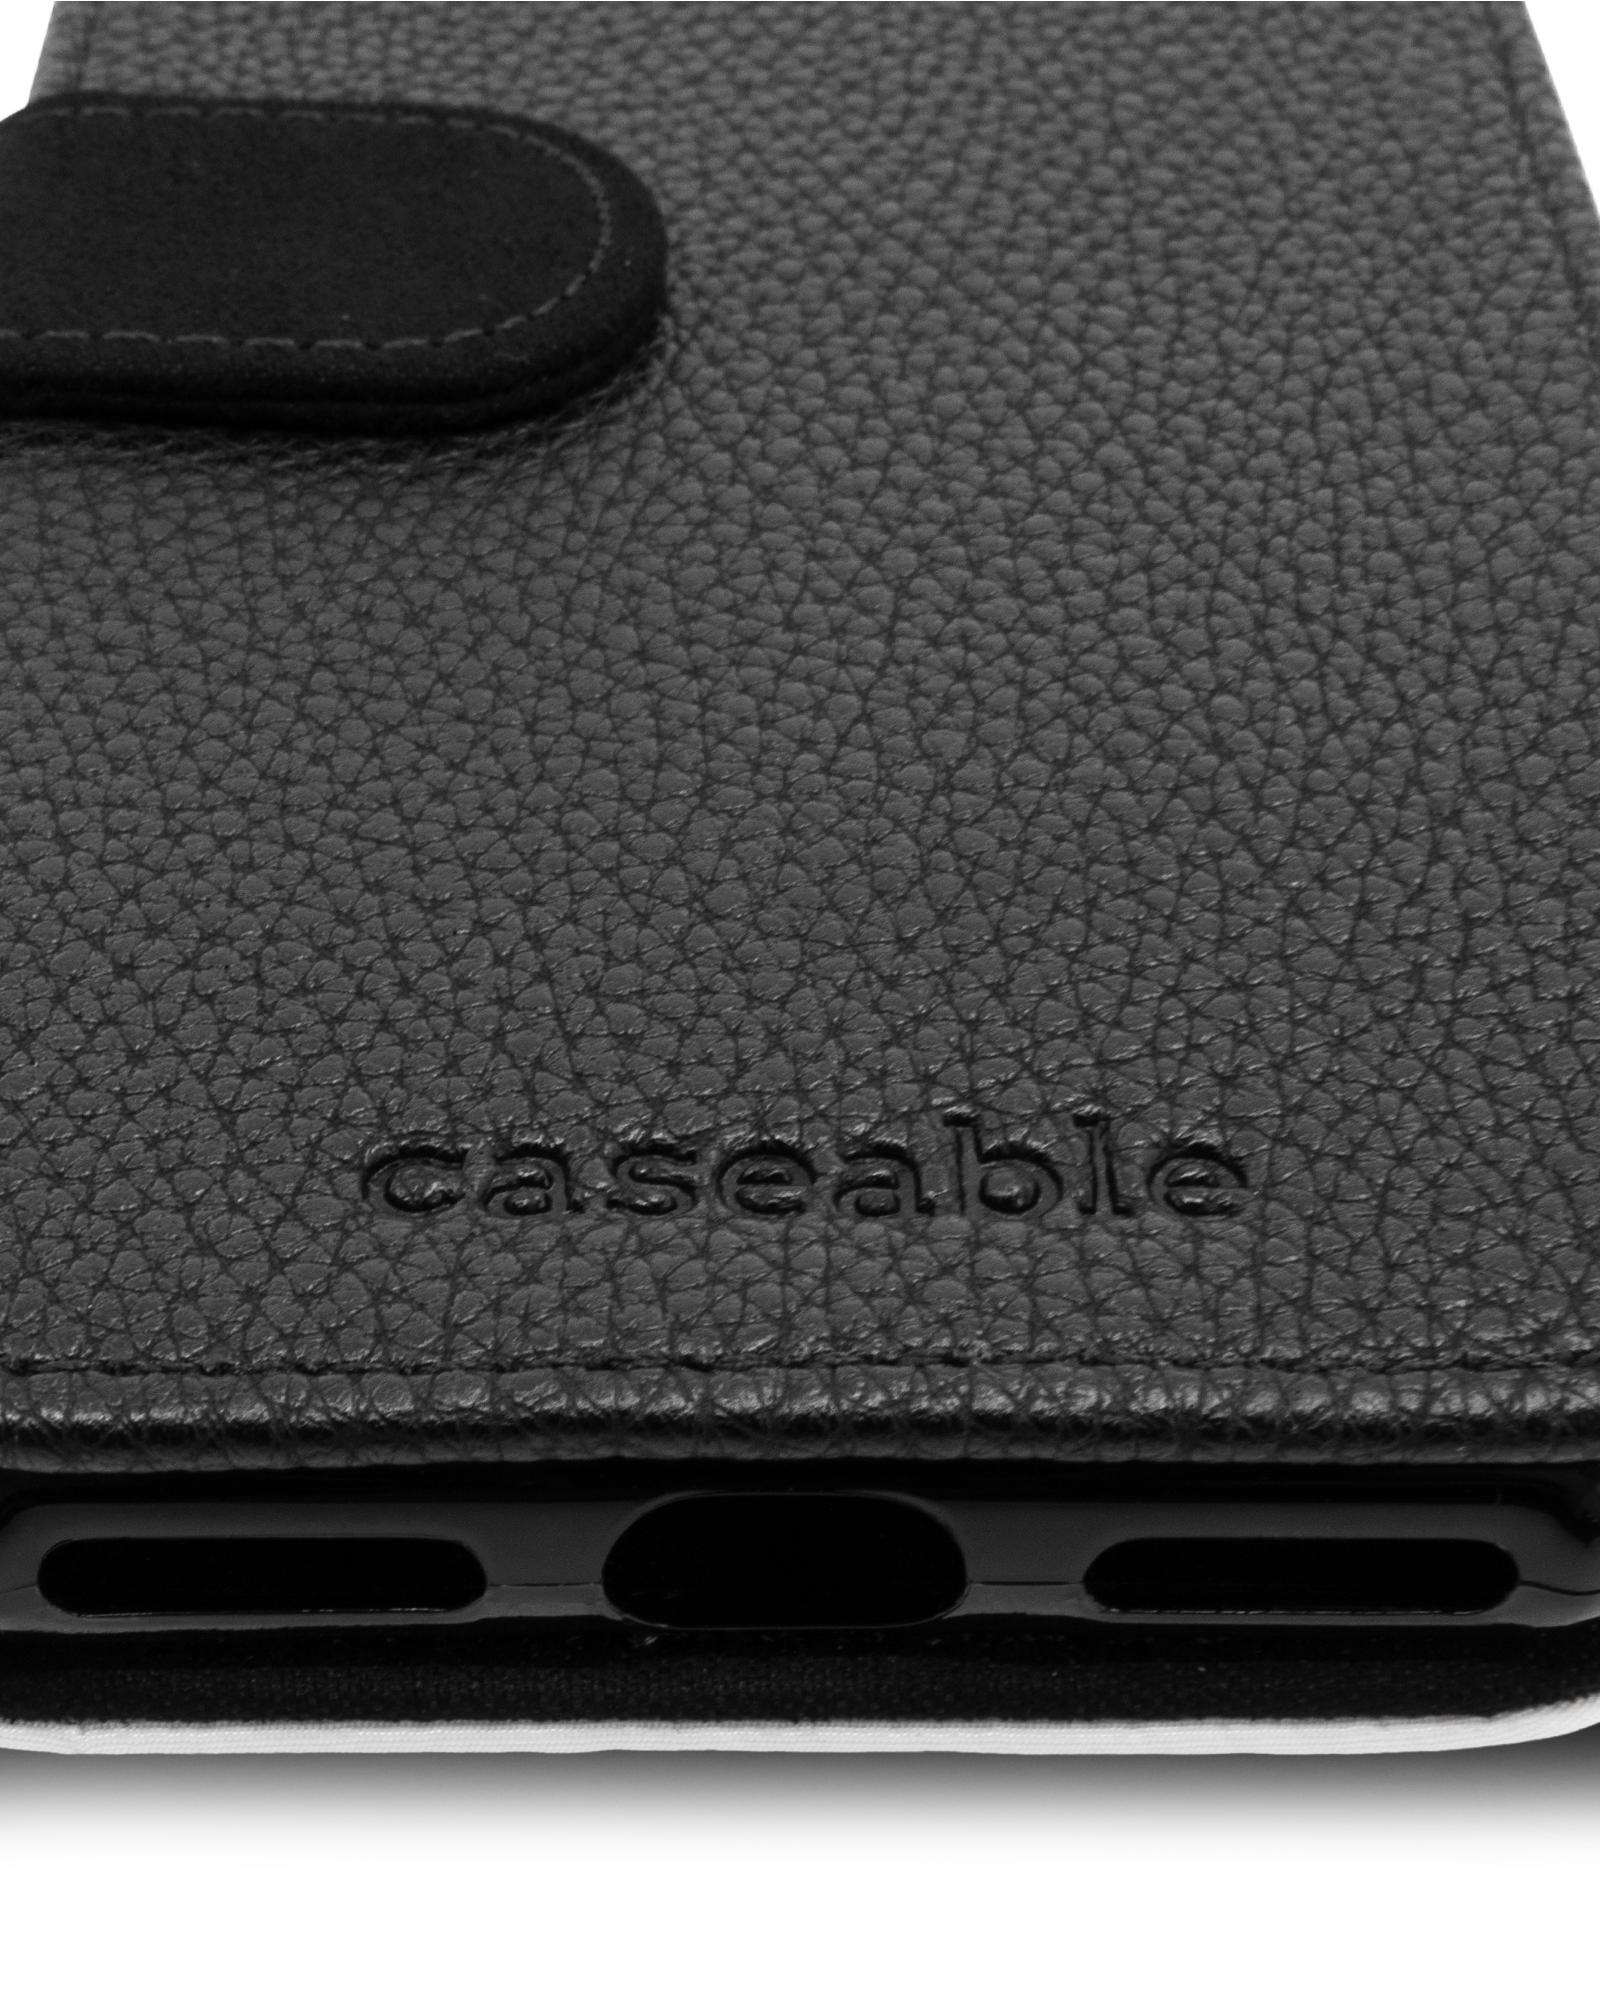 BLACK Wallet Phone Case Samsung Galaxy S10e